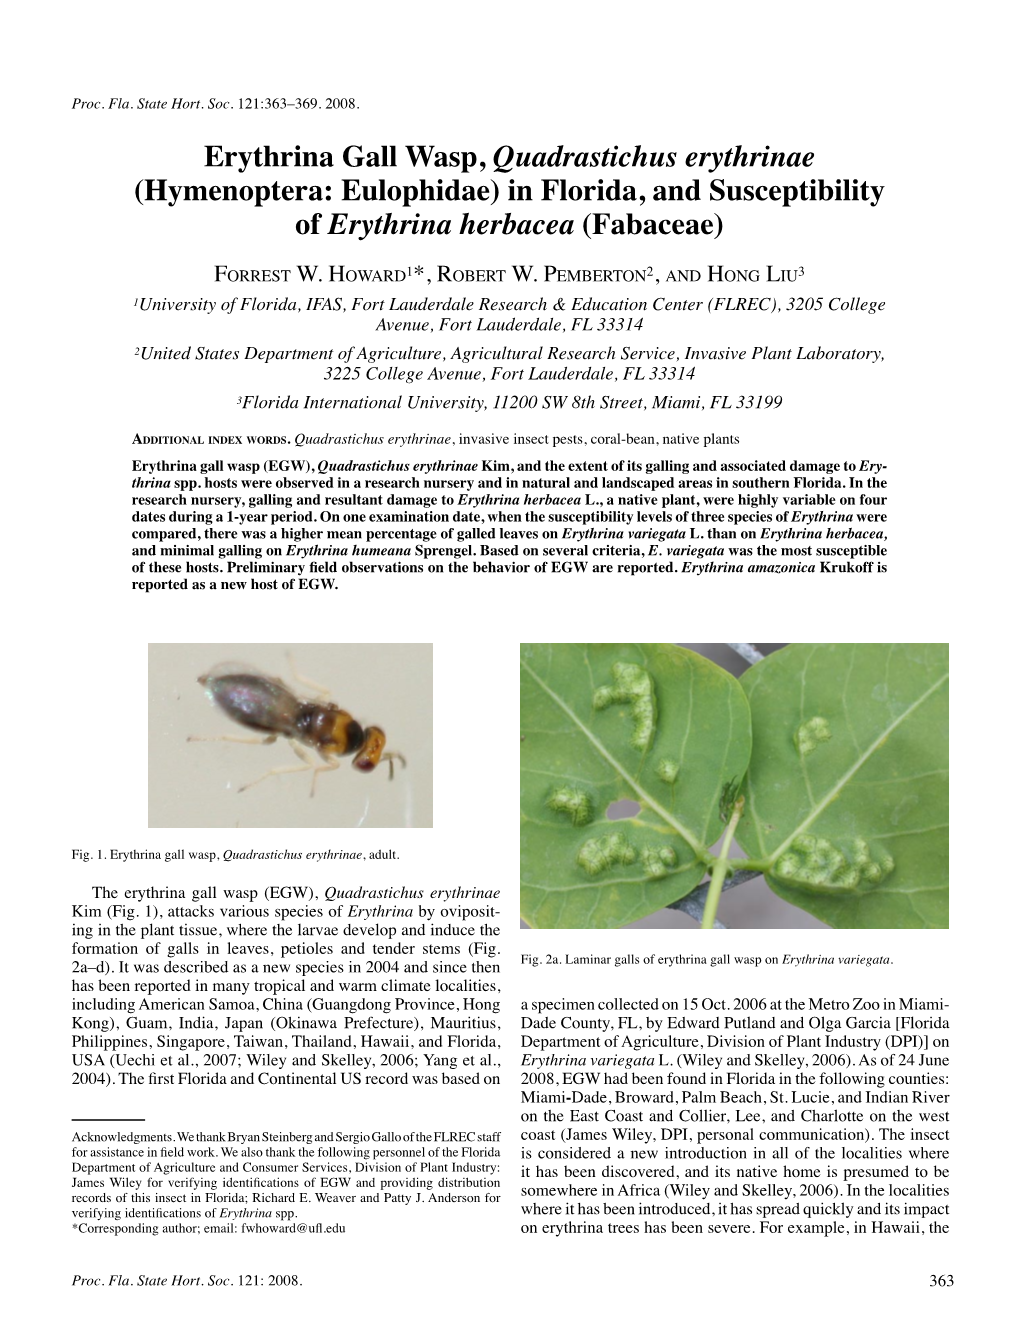 Erythrina Gall Wasp, Quadrastichus Erythrinae (Hymenoptera: Eulophidae) in Florida, and Susceptibility of Erythrina Herbacea (Fabaceae)